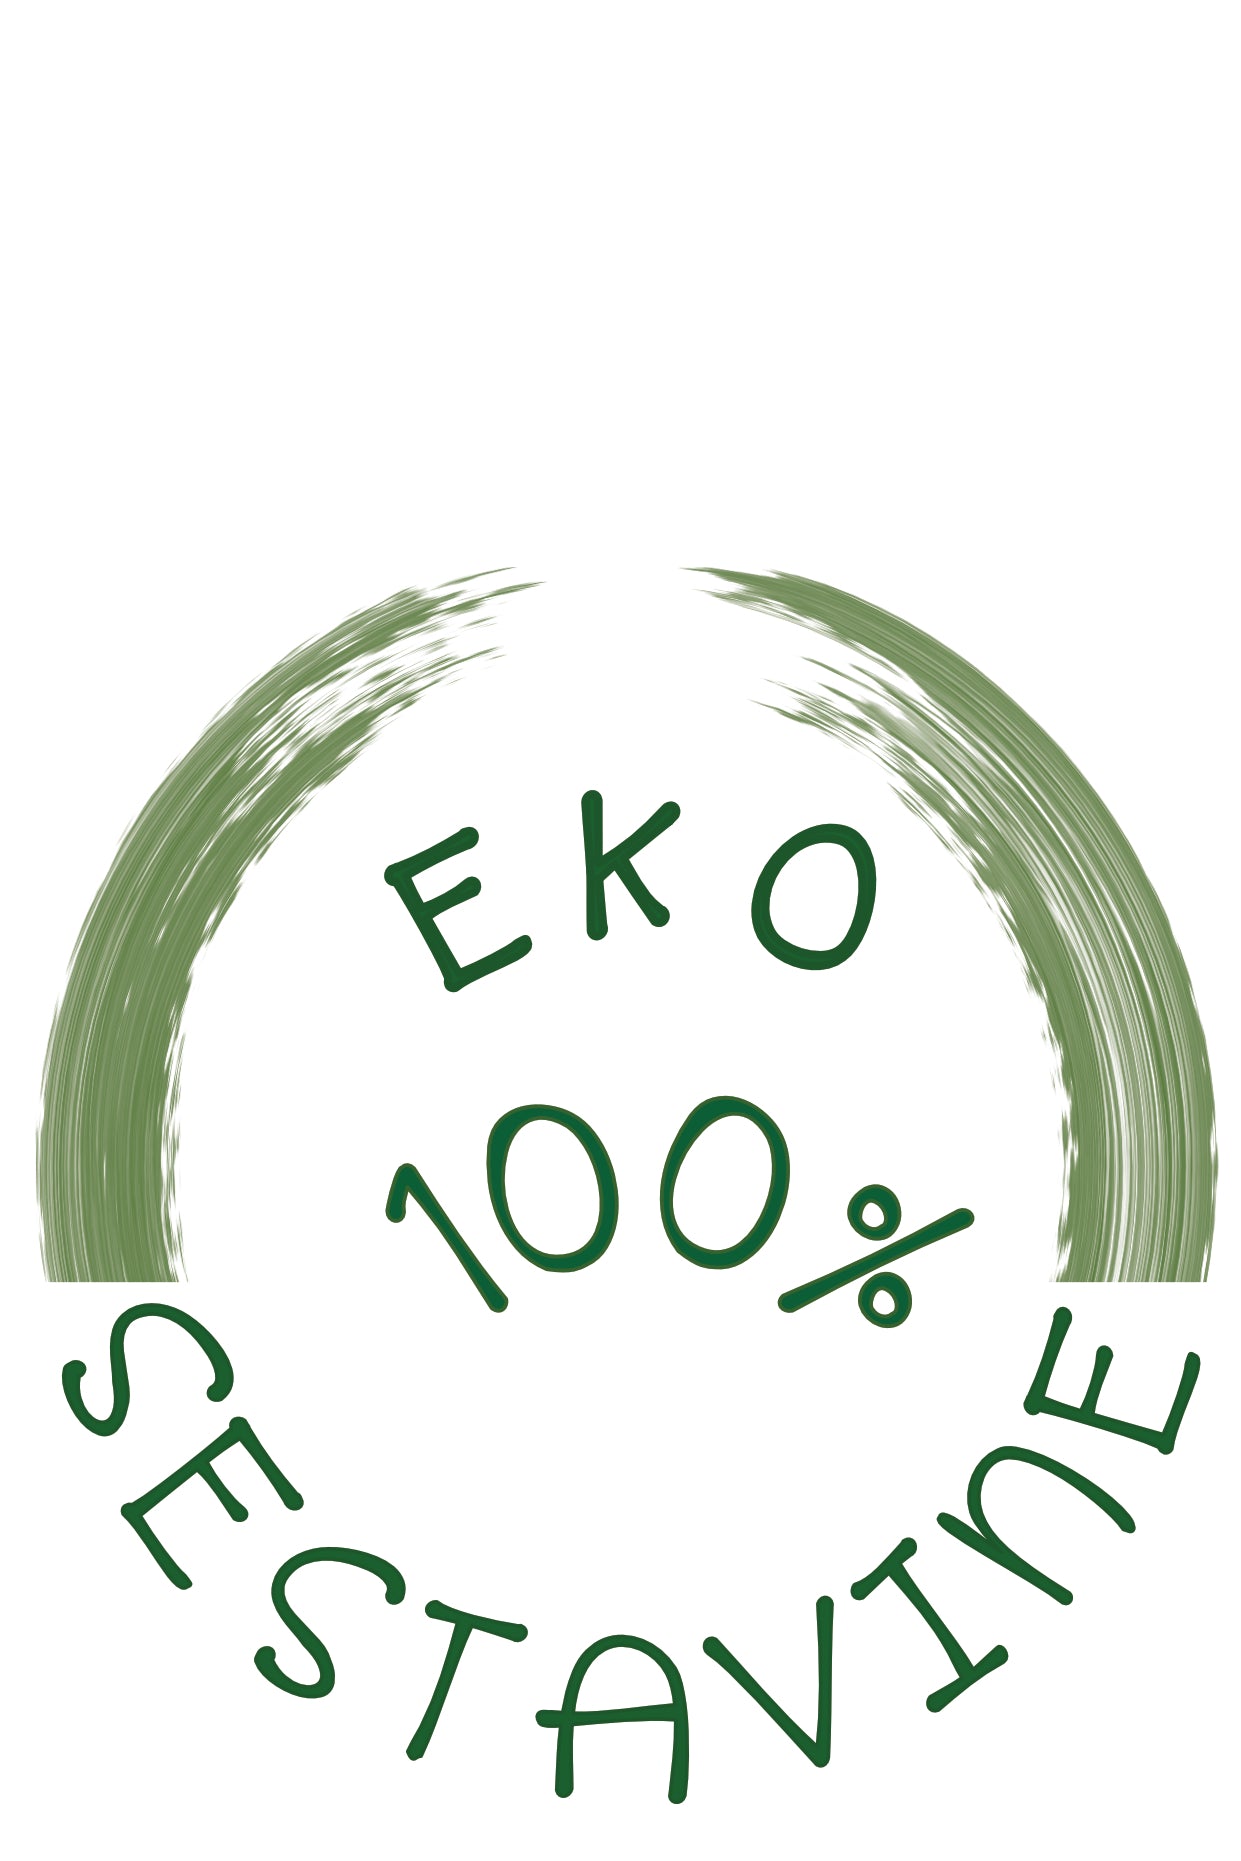 eko, 100% ekološke sestavine, esence dreves, bachove kapljice, ekološka esenca macesna